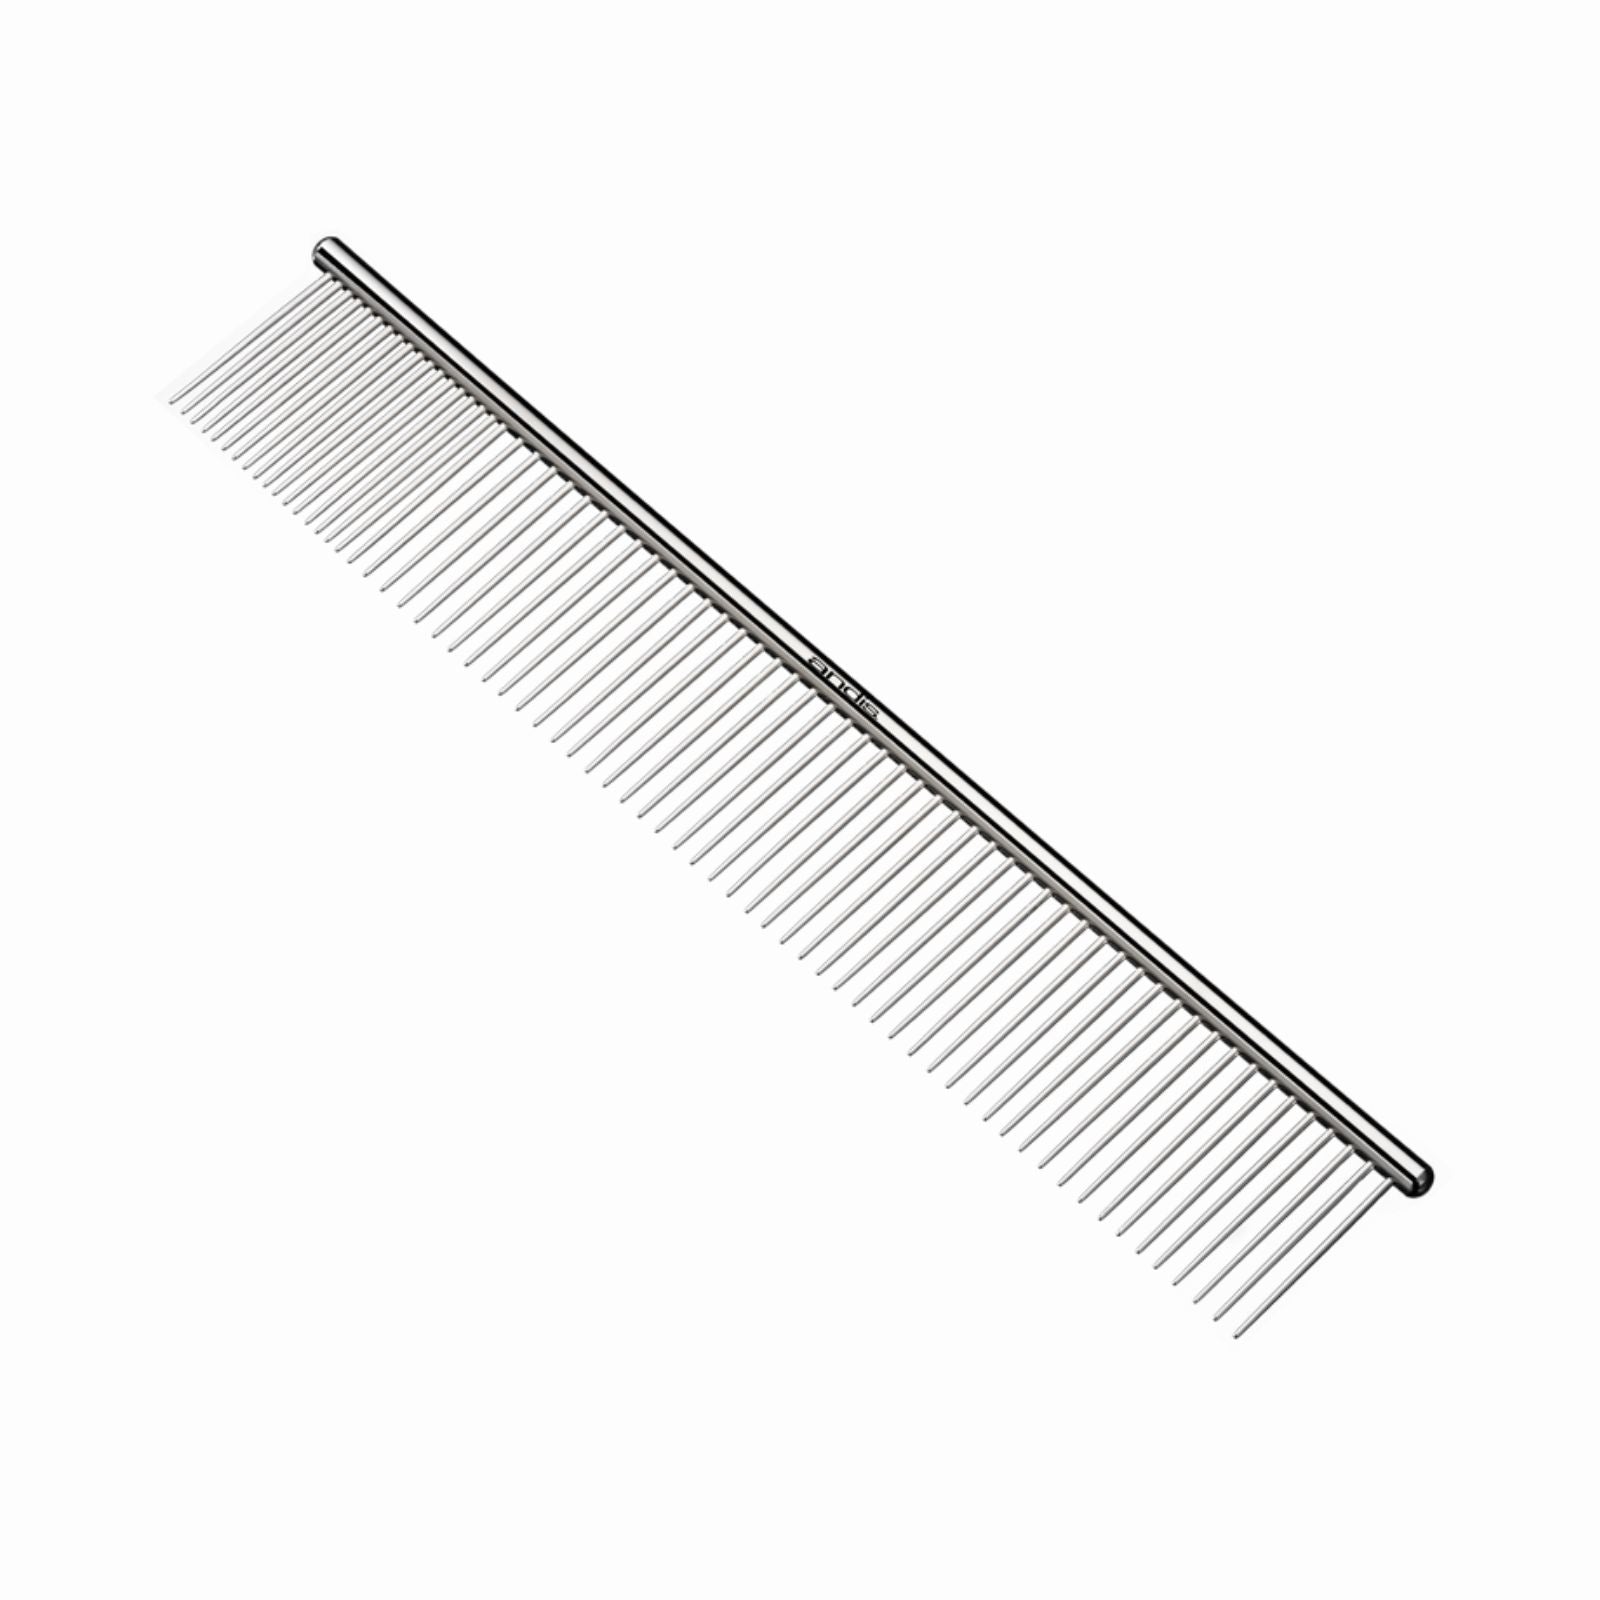 Durable steel comb for pet grooming